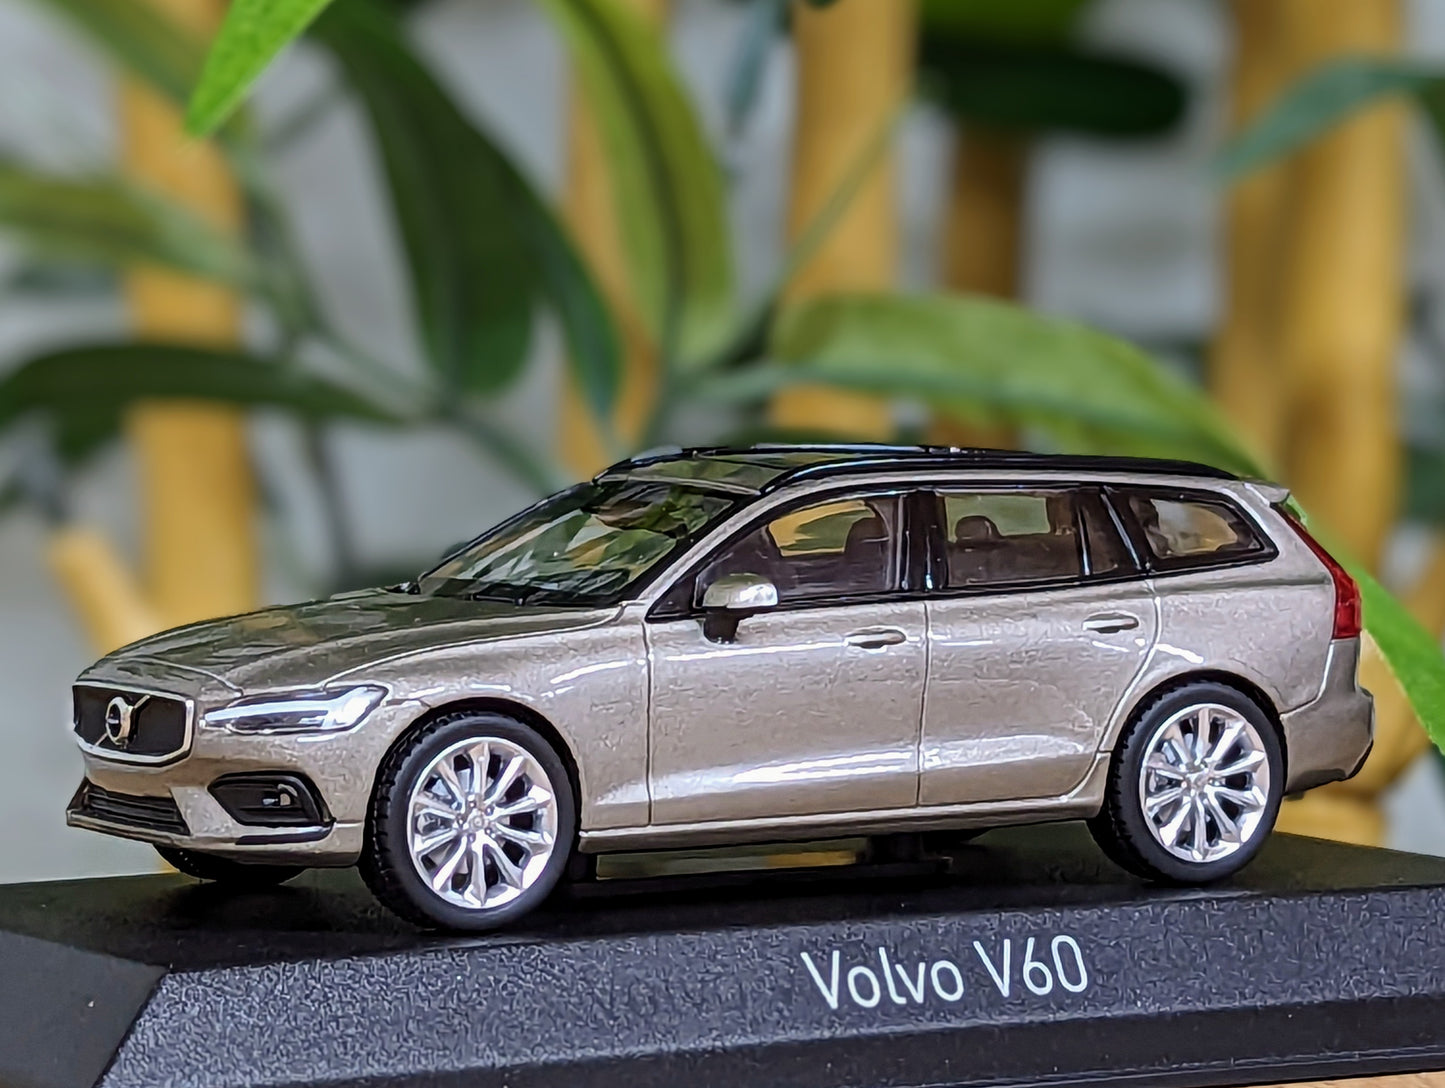 NOREV Volvo V60 - Pebble Grey - 1/43 Diecast Car Scale Model - Free UK Delivery